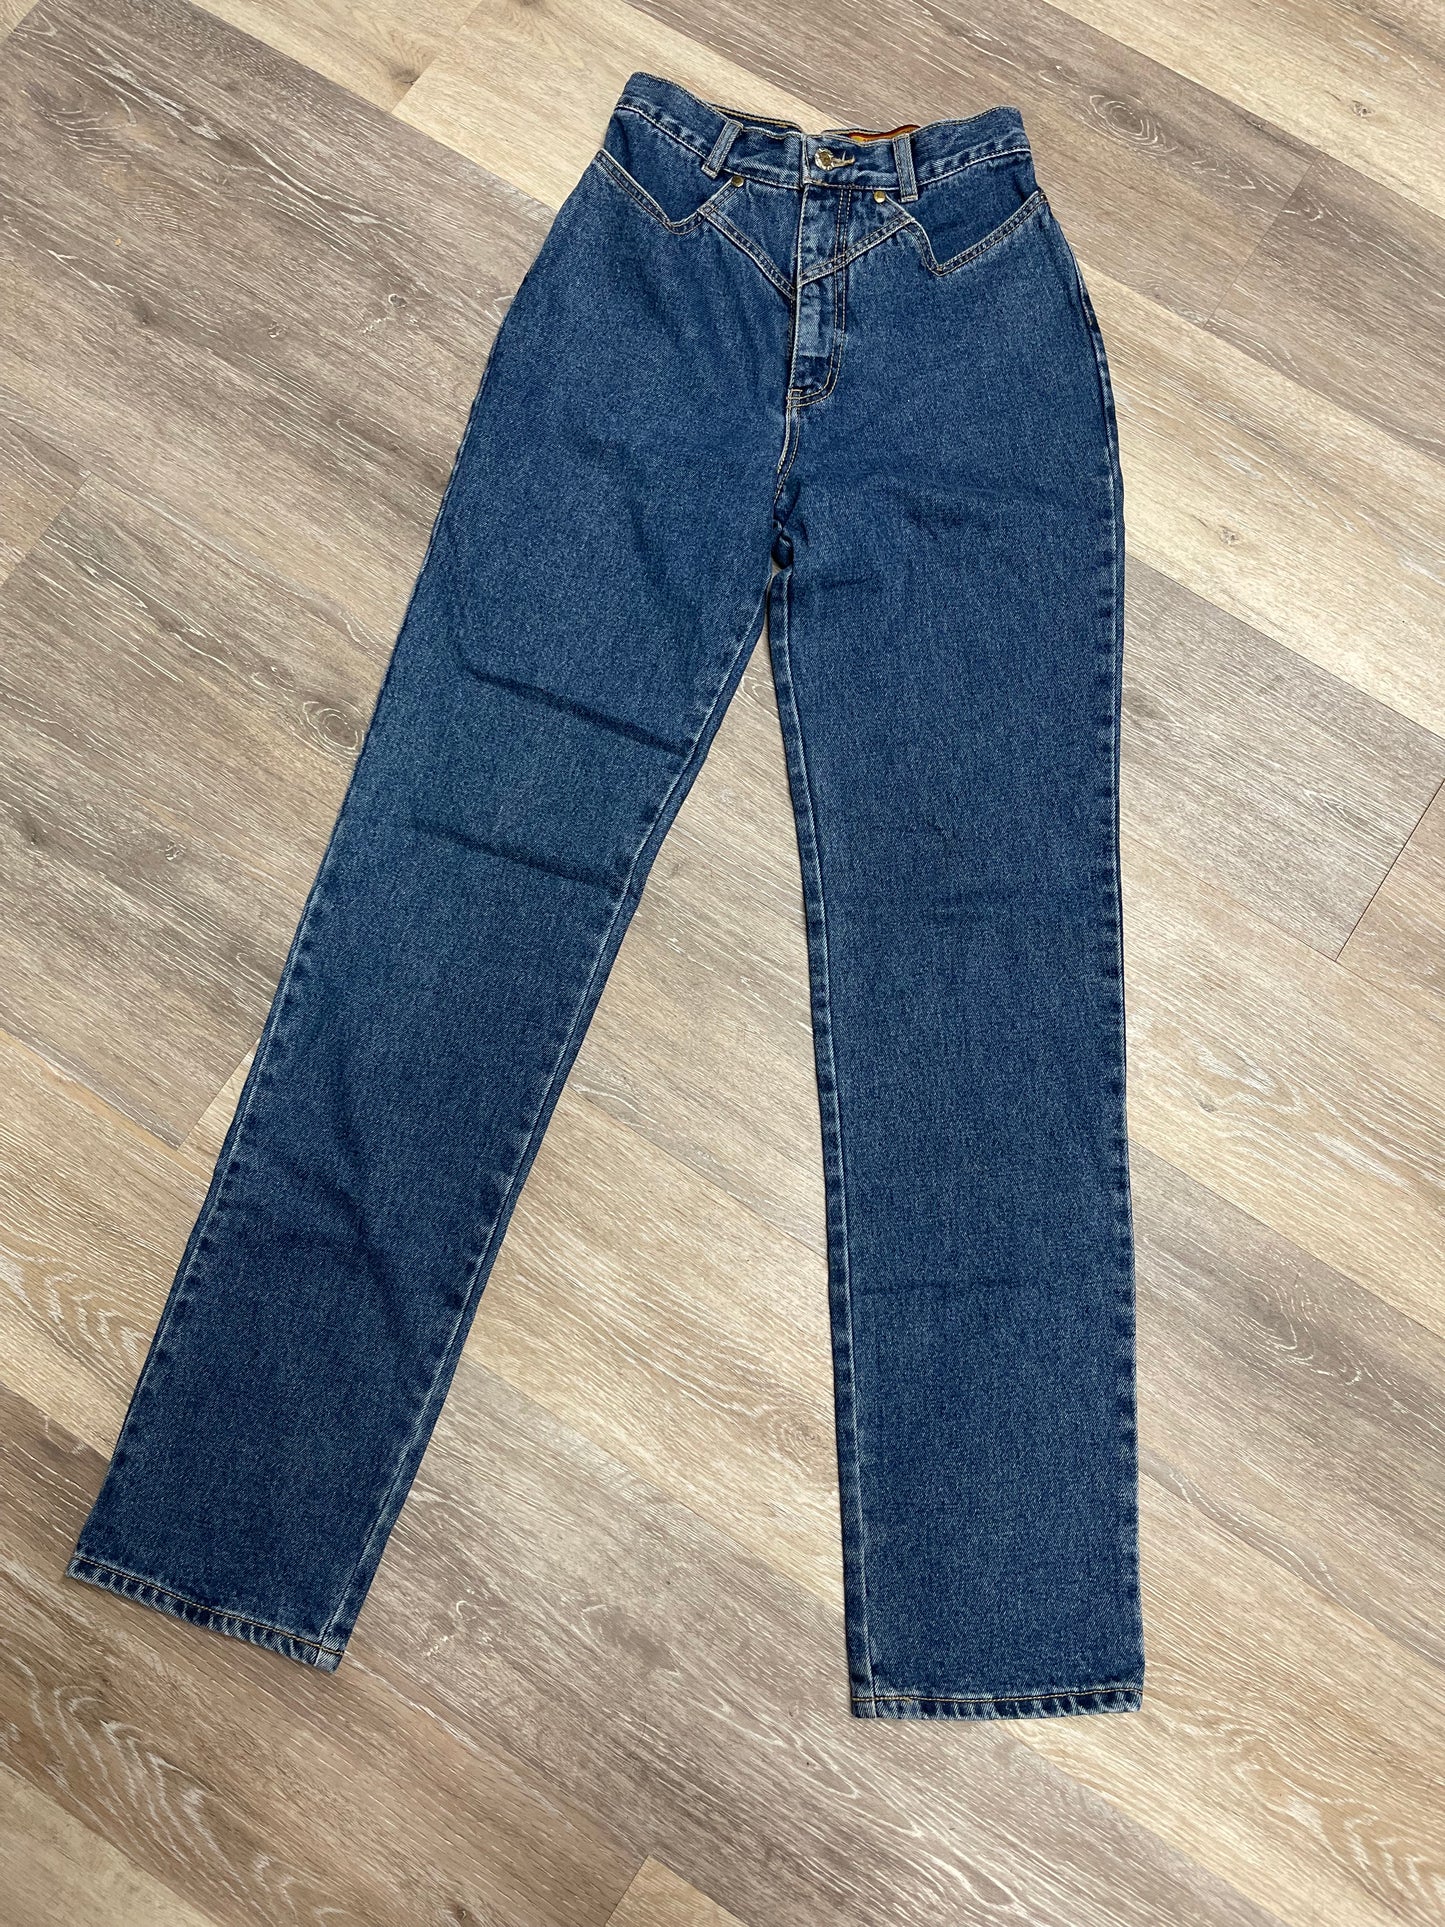 Size 5 Vintage Lawman Bareback Denim Jeans